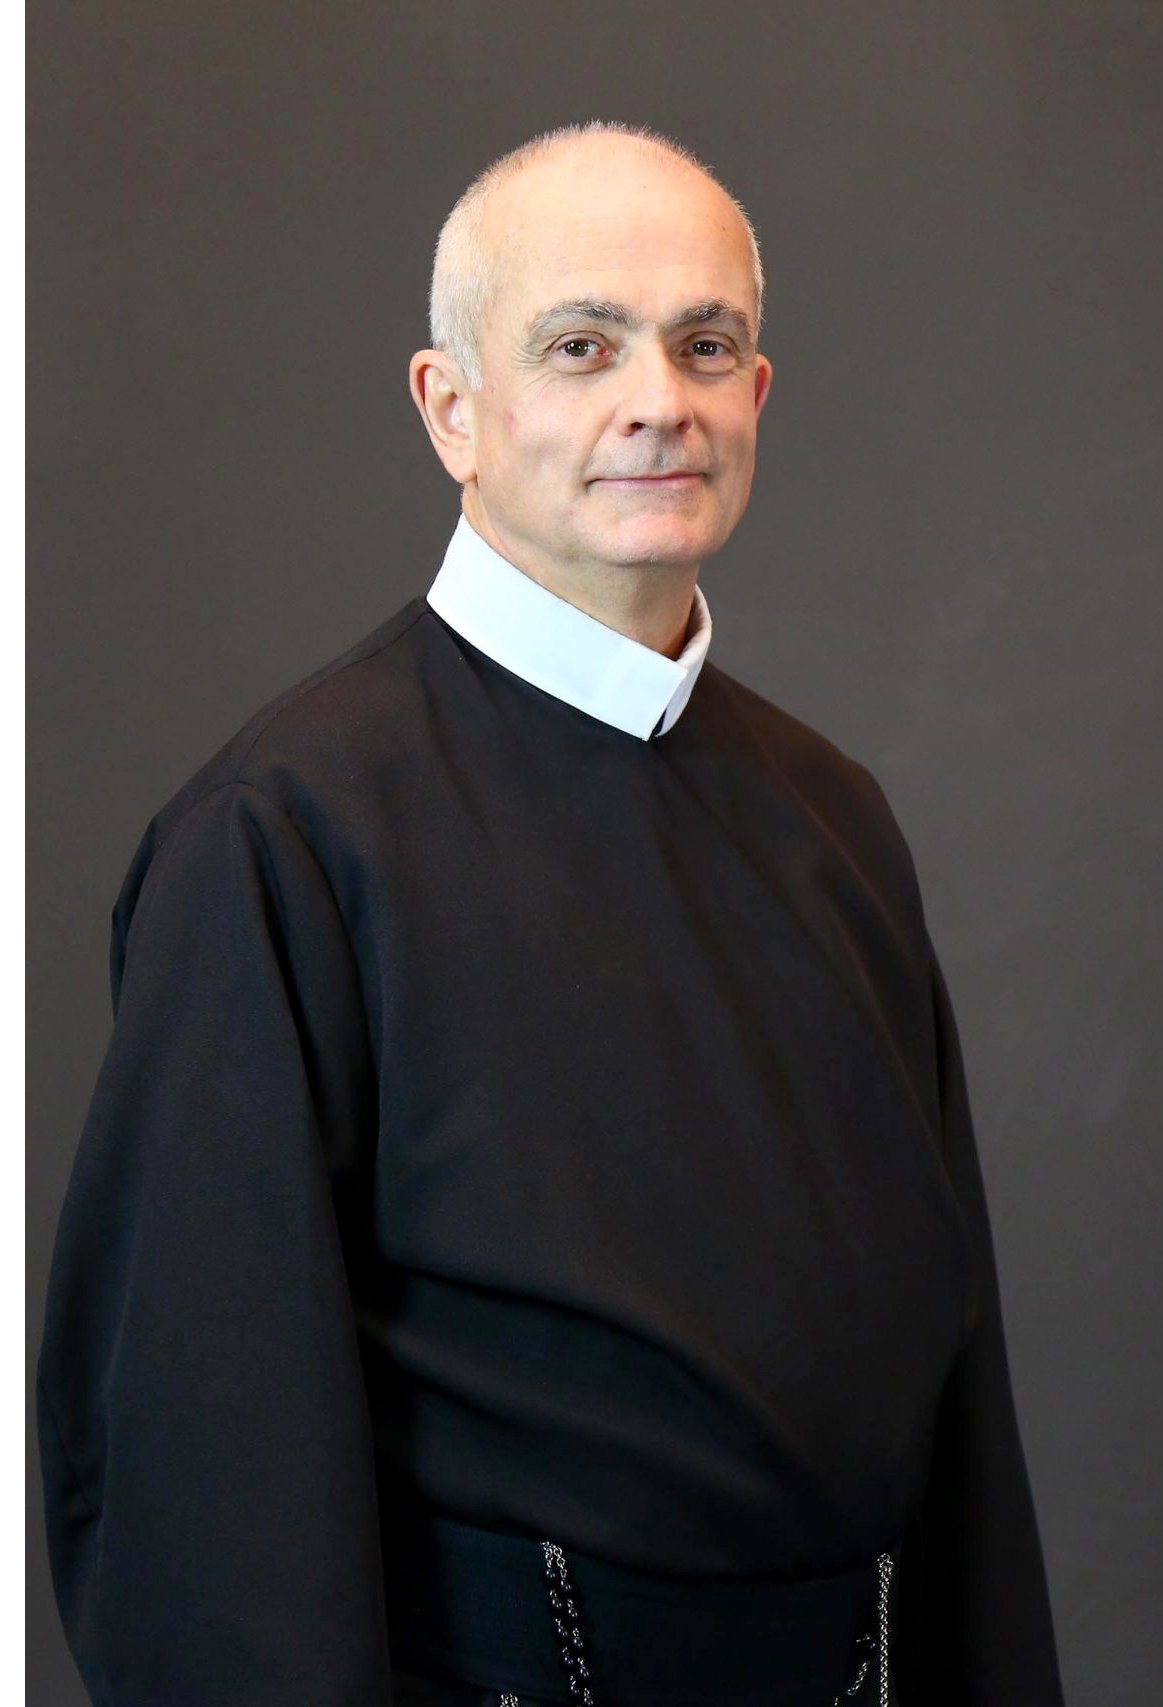 Fr. Michael Brehl